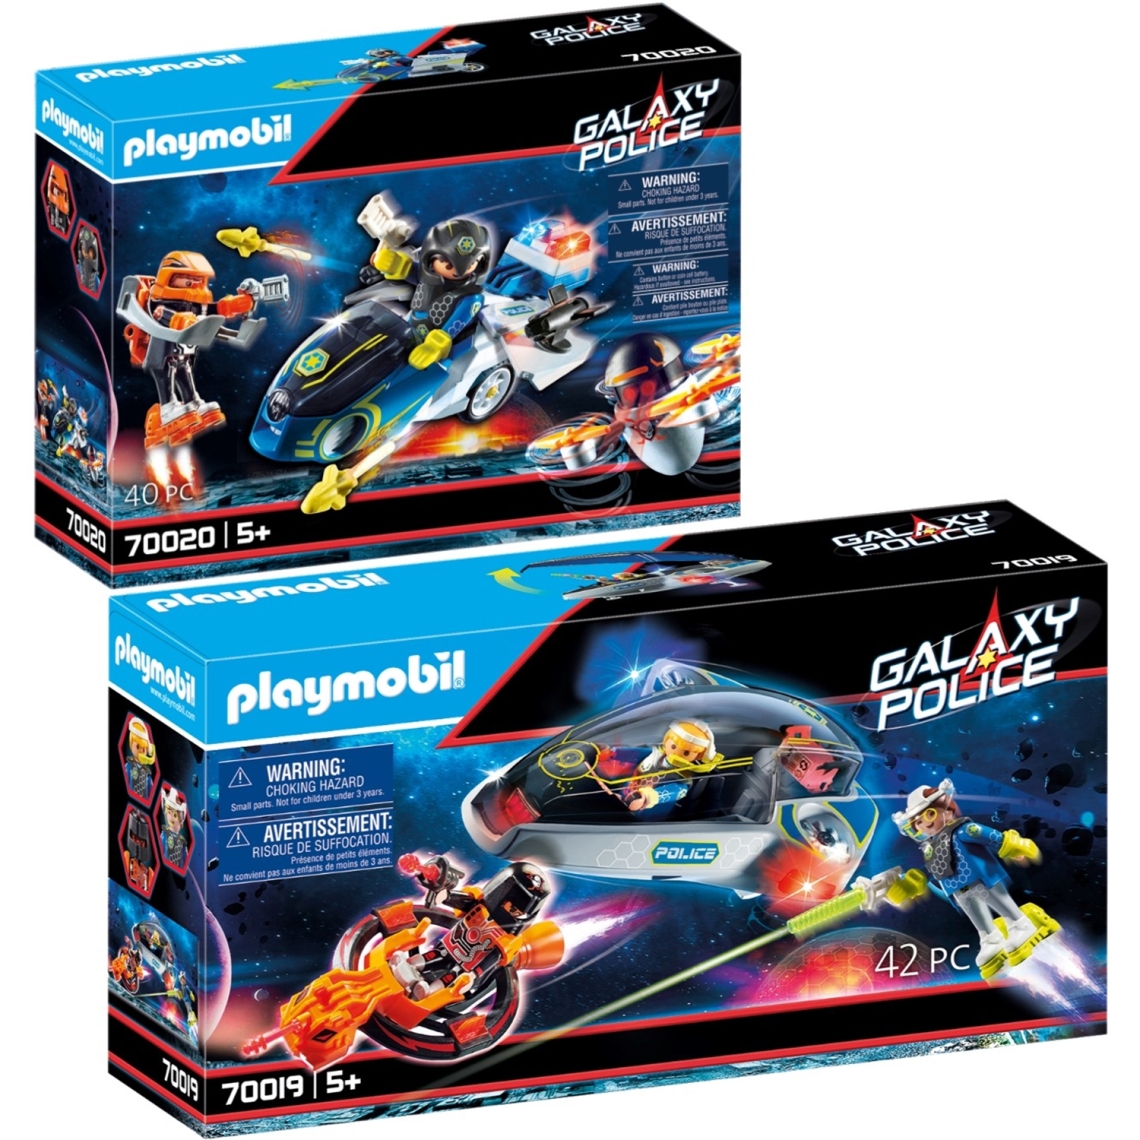 Playmobil - PLAYMOBIL 70019 70020 - Galaxy Police Lot de 2 Articles Véhicule volant + Moto et policier - Playmobil